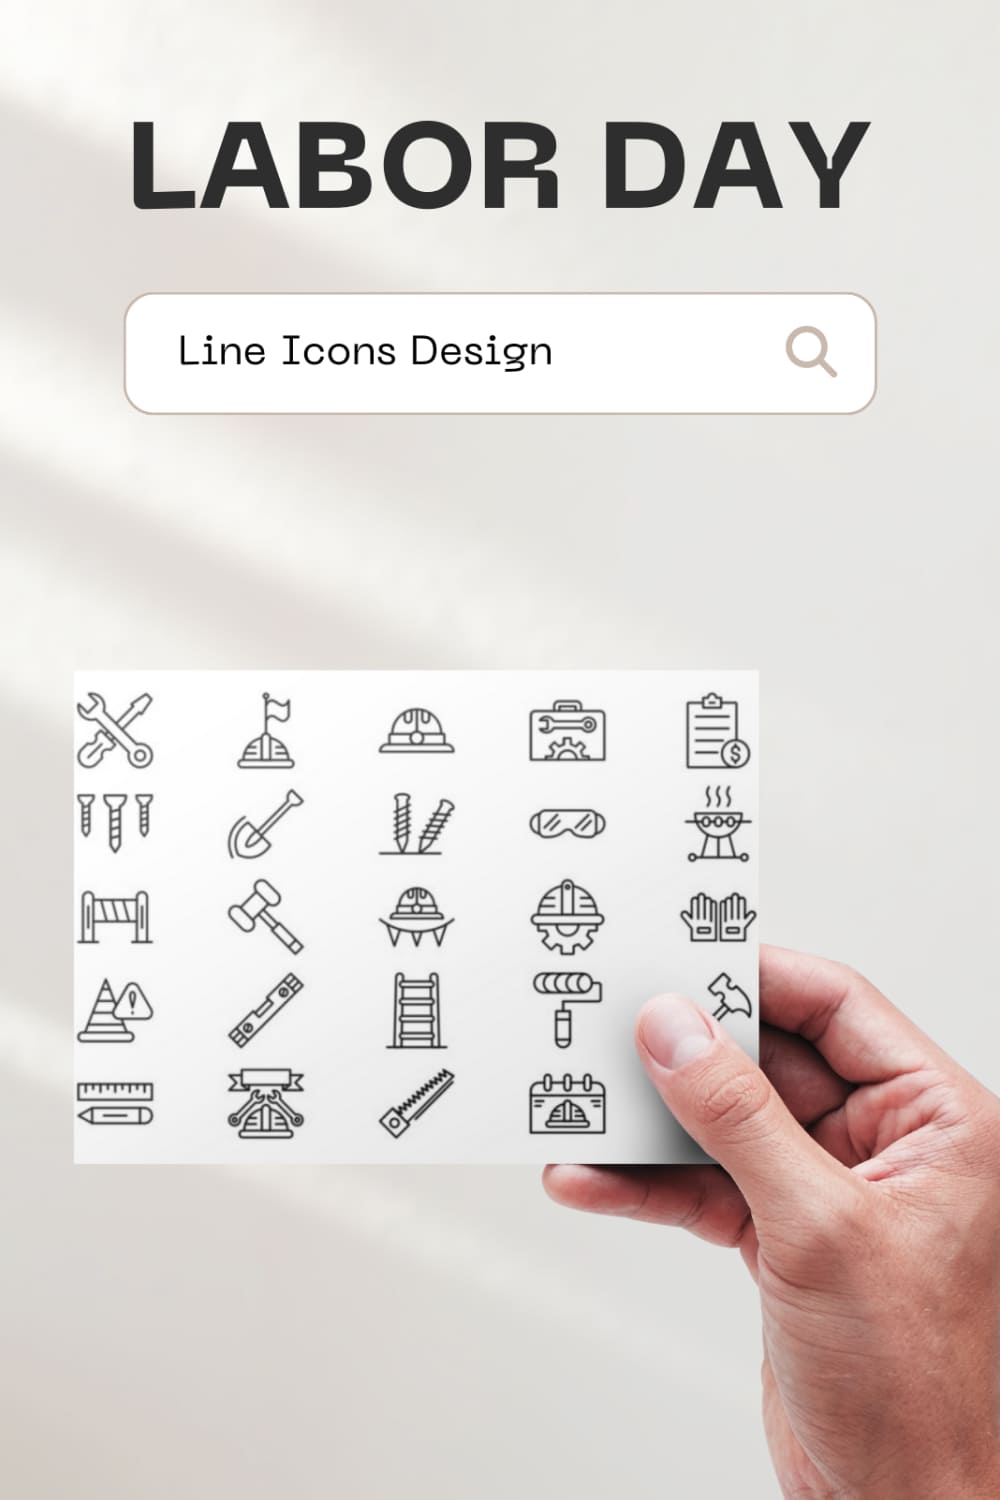 Labor Day Line Icons Design - Pinterest.